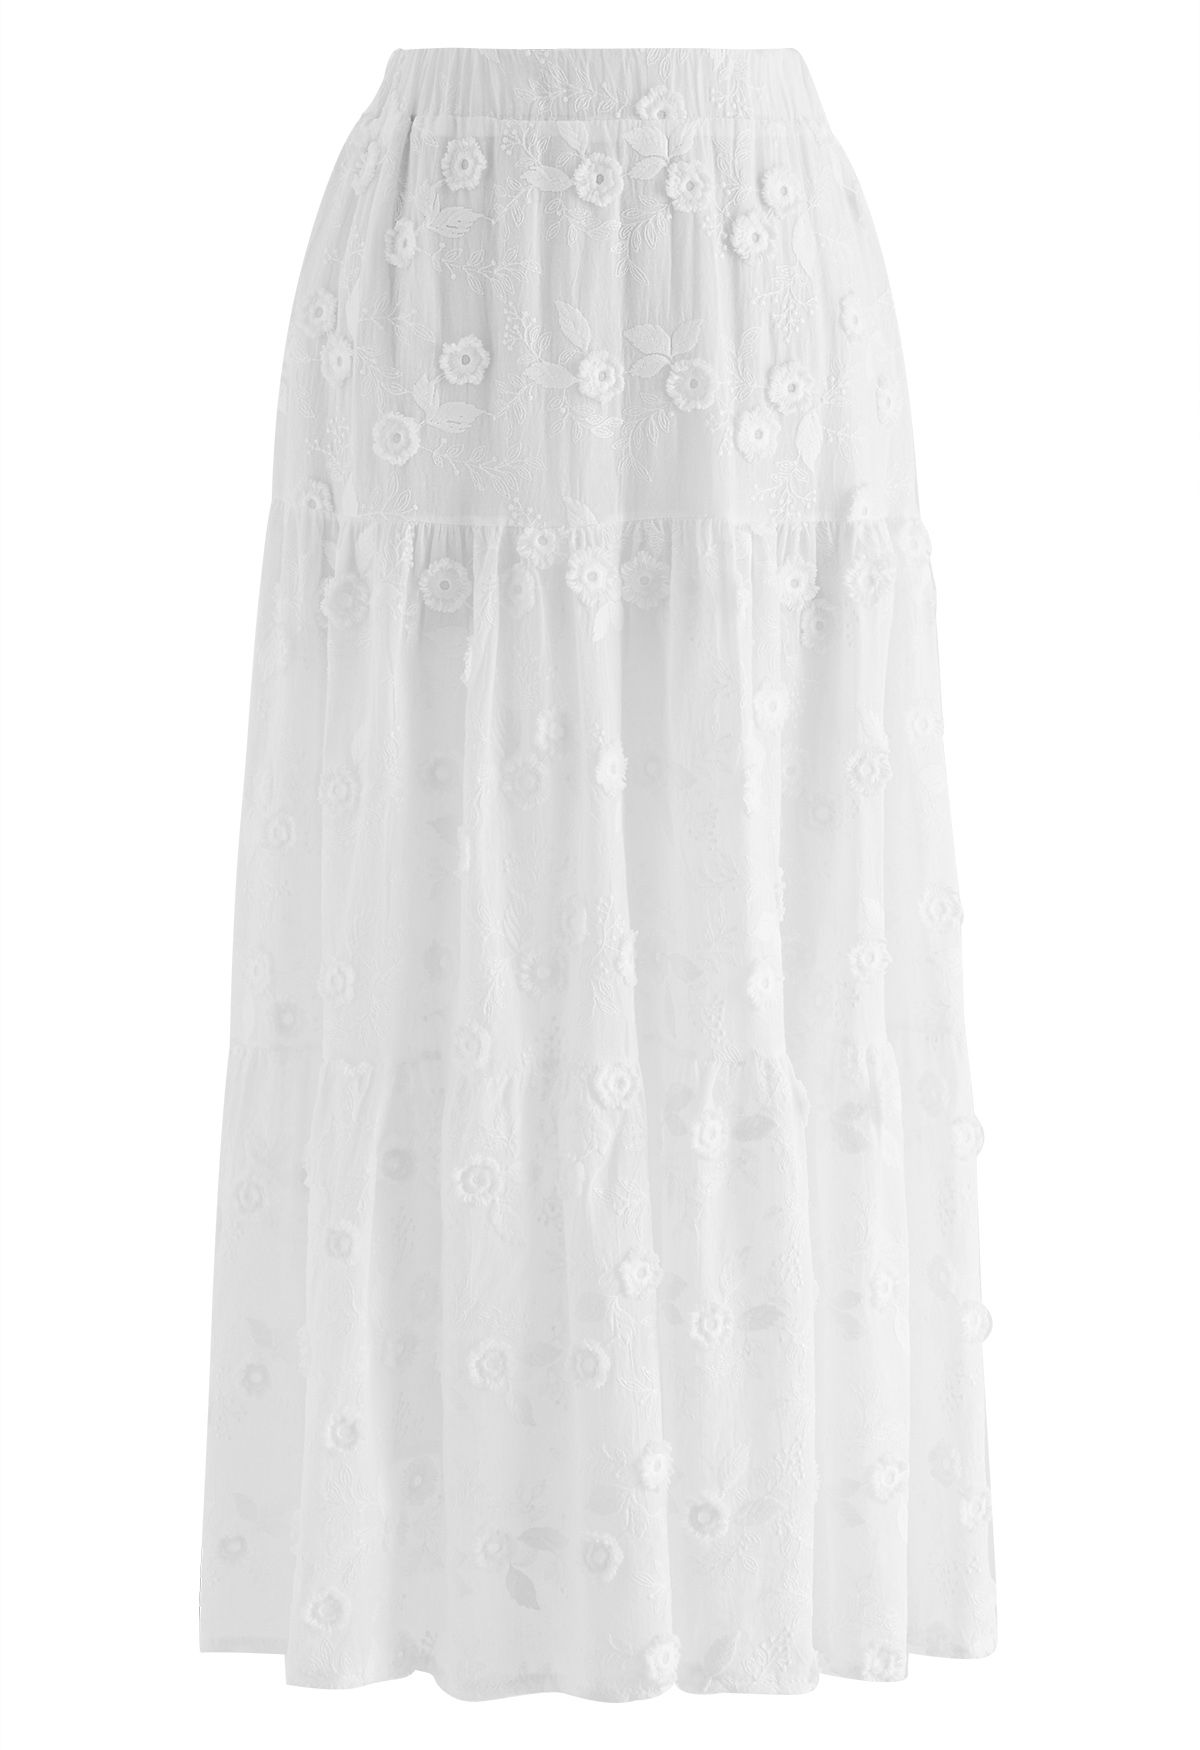 Tasseled Florets Embroidered Midi Skirt in White